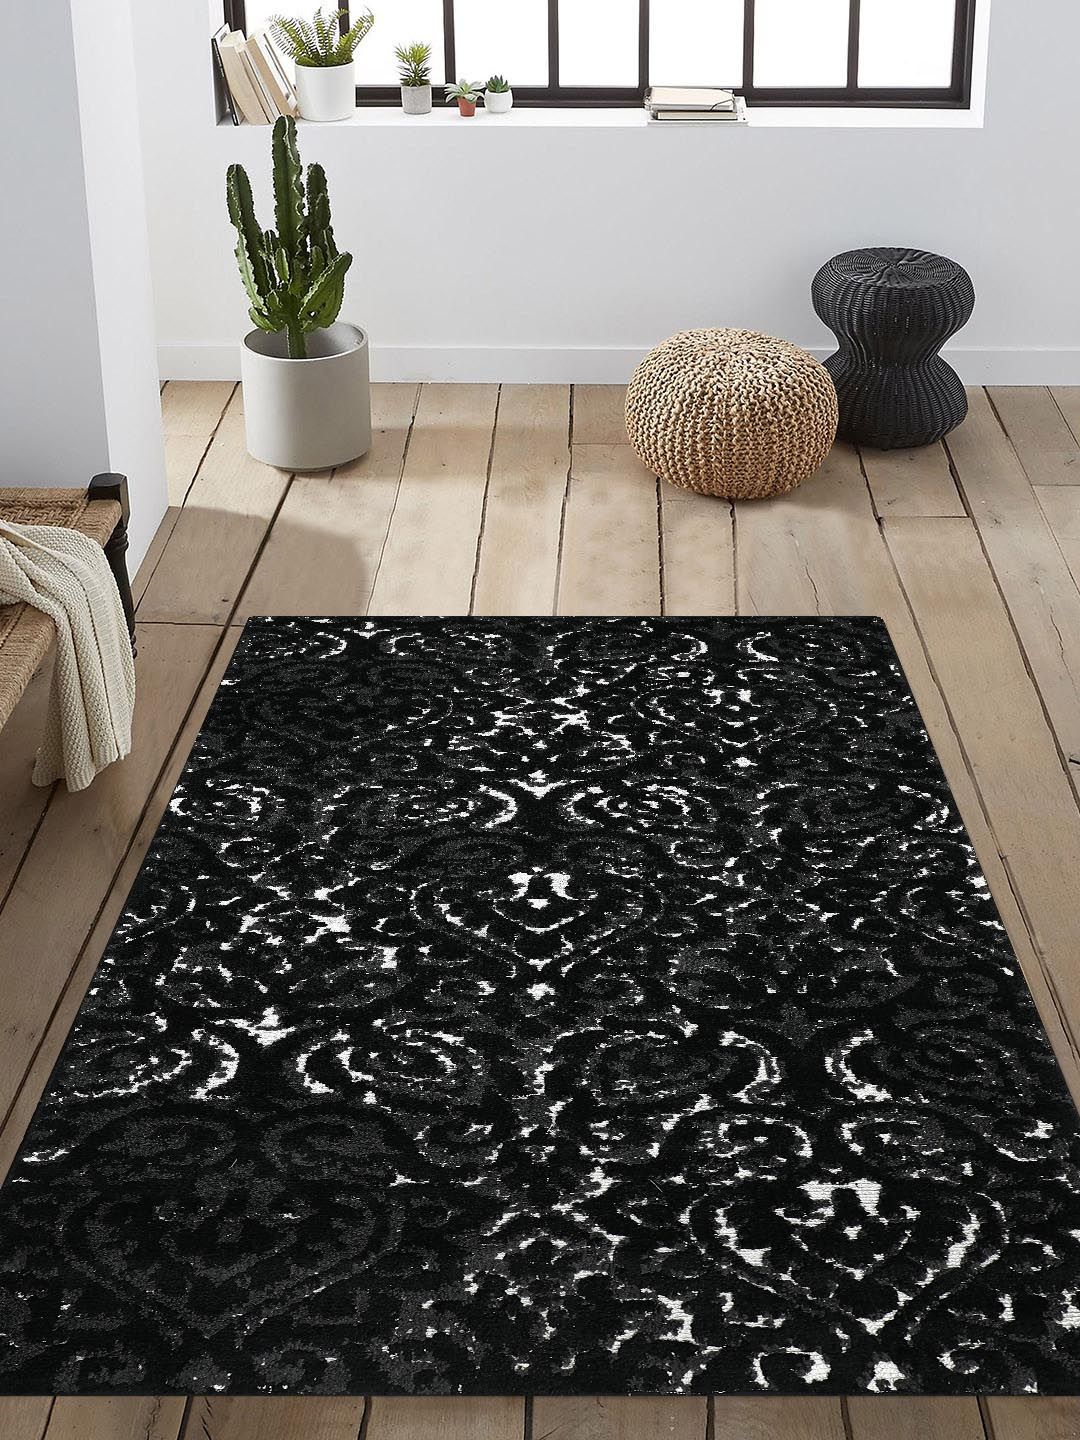 PRESTO Charcoal Grey & Black Ethnic Patterned Anti-Skid Carpet Price in India